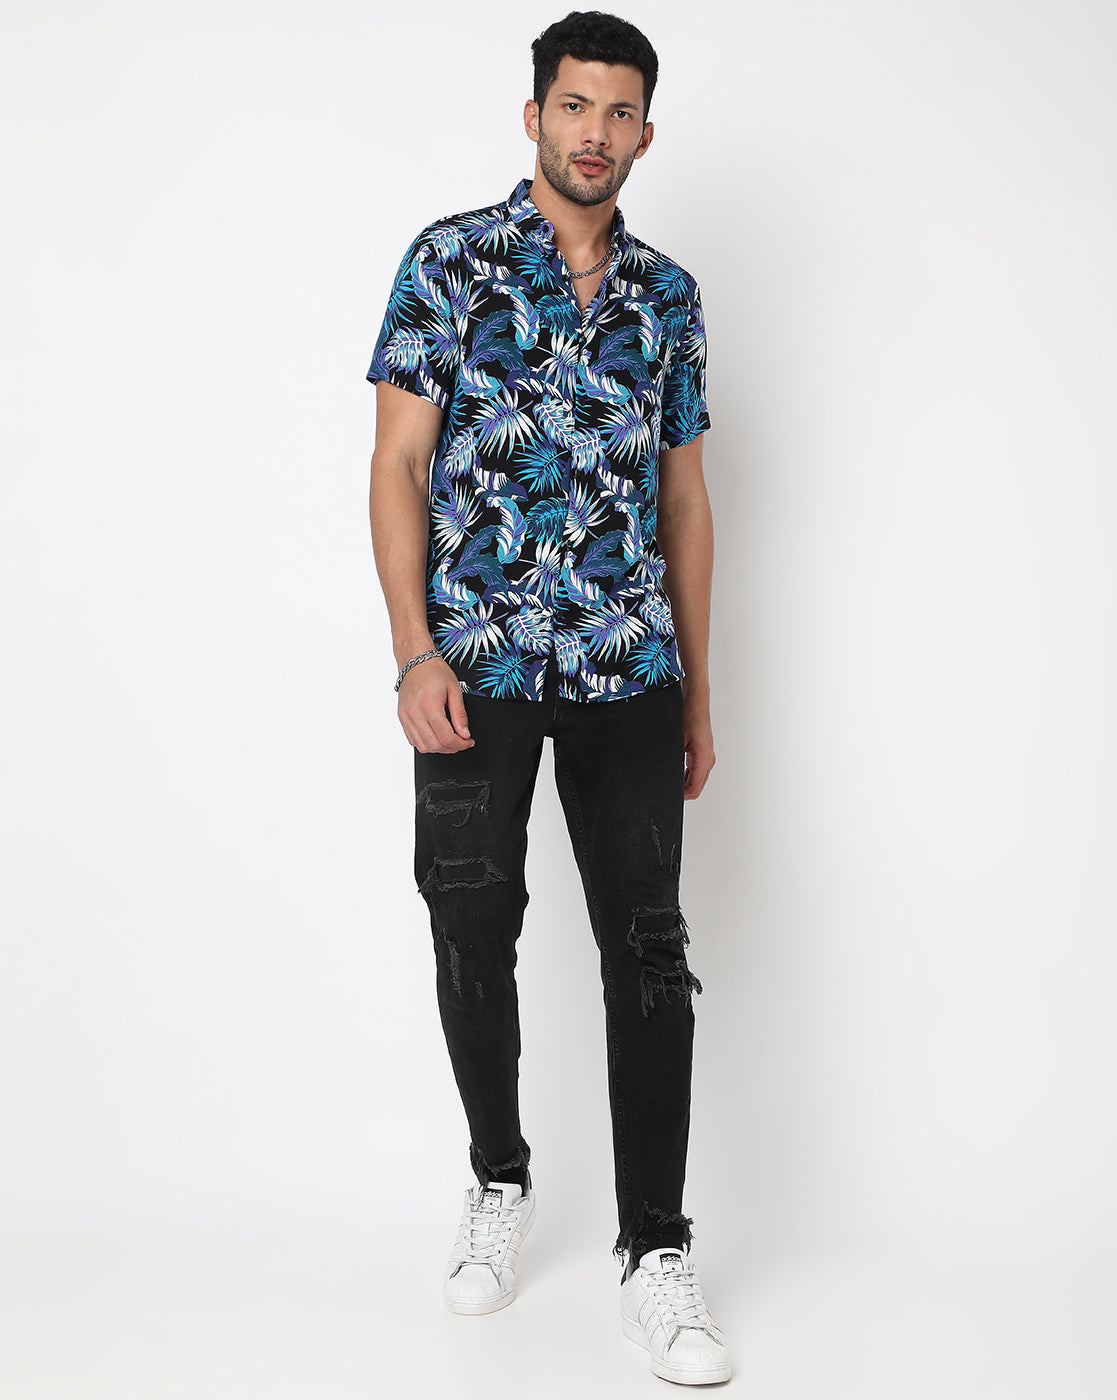 Blue & Black Tropical Printed Rayon Half Sleeve Shirt